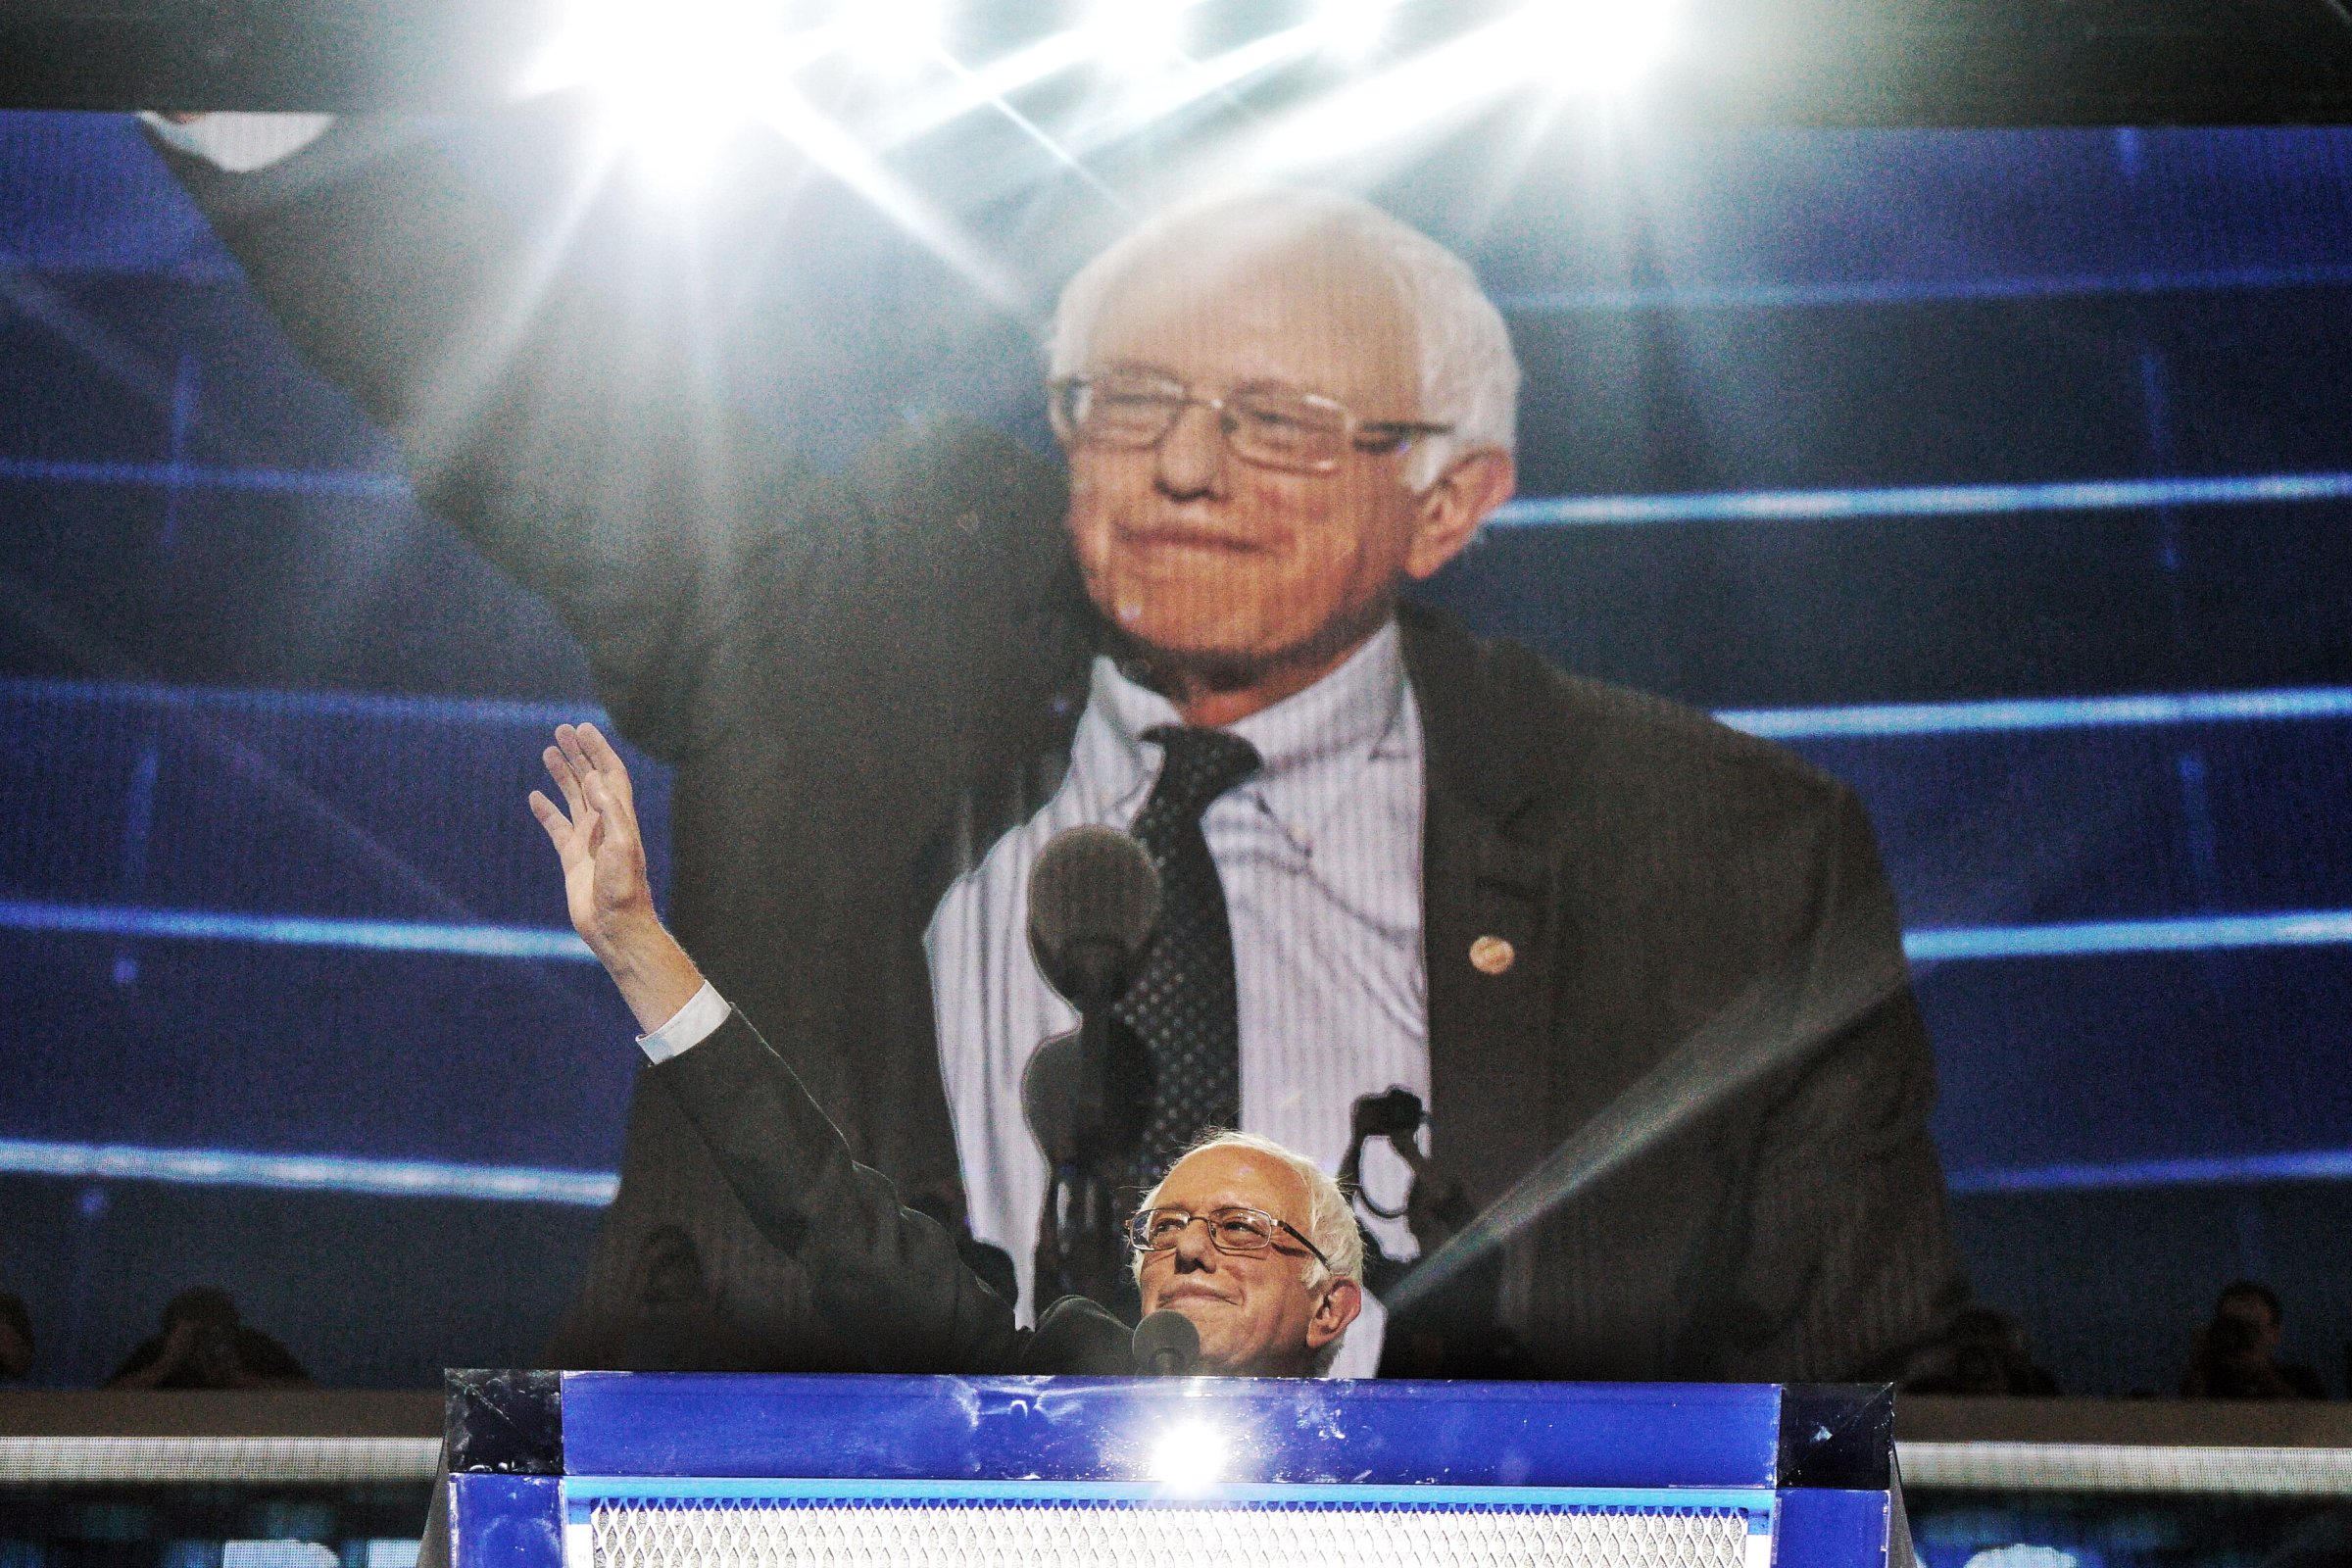 Vermont Sen. Bernie Sanders speaks during the Democratic National Convention on July 25, 2016 in Philadelphia.